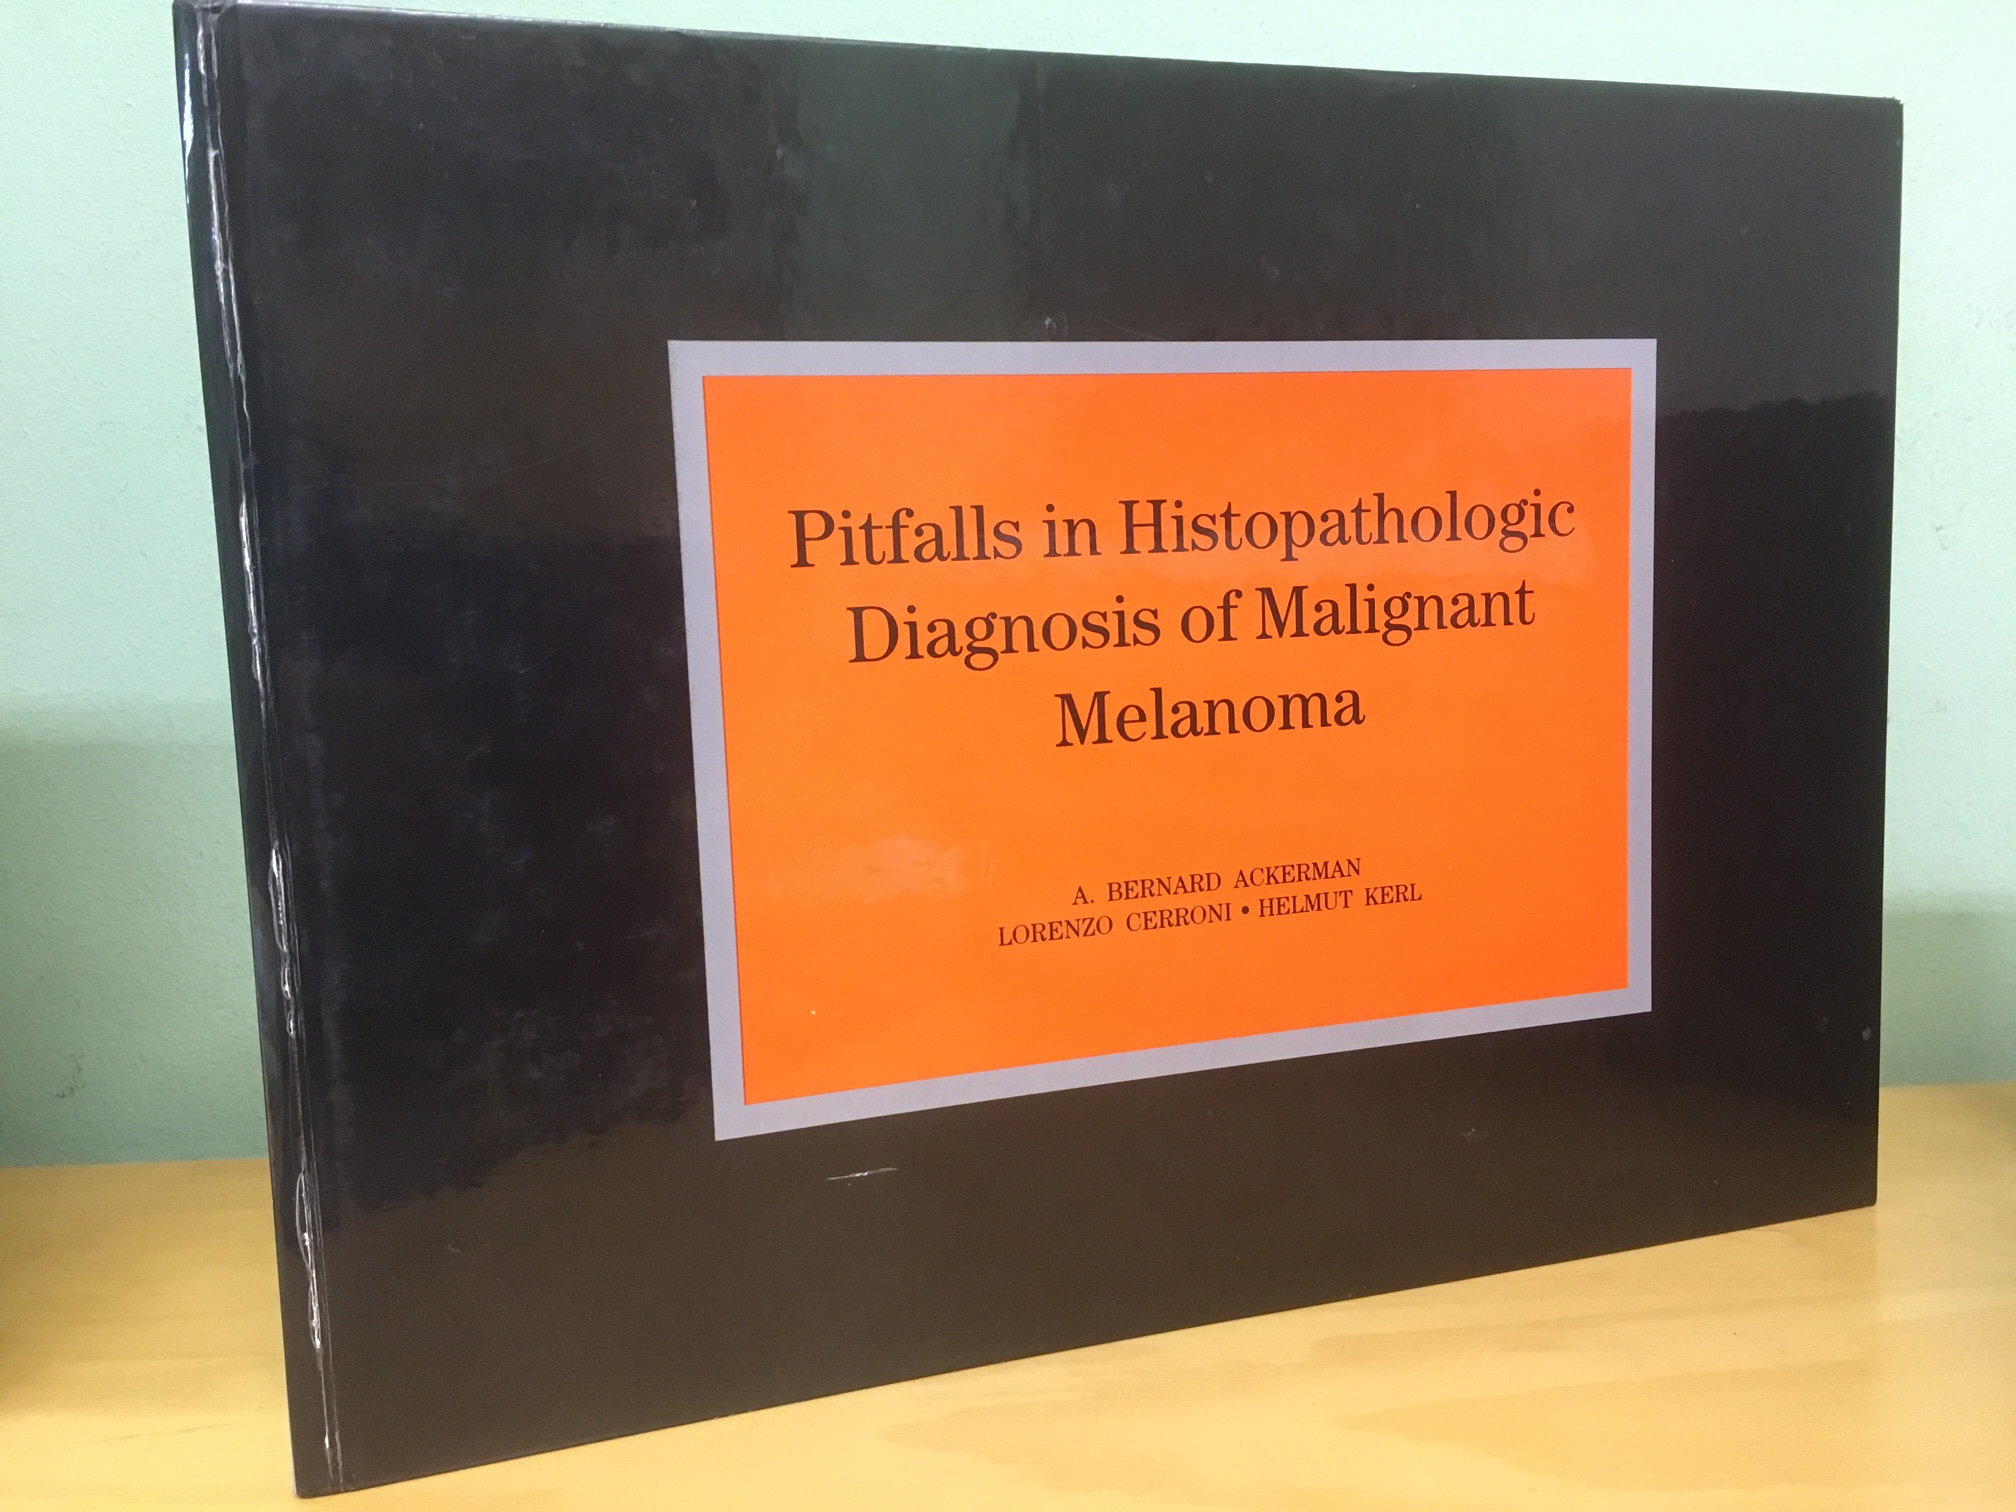 Ackerman, A. Bernard, Lorenzo Cerroni and Helmut Kerl:  Pitfalls in Histopathologic Diagnosis of Malignant Melanoma. 